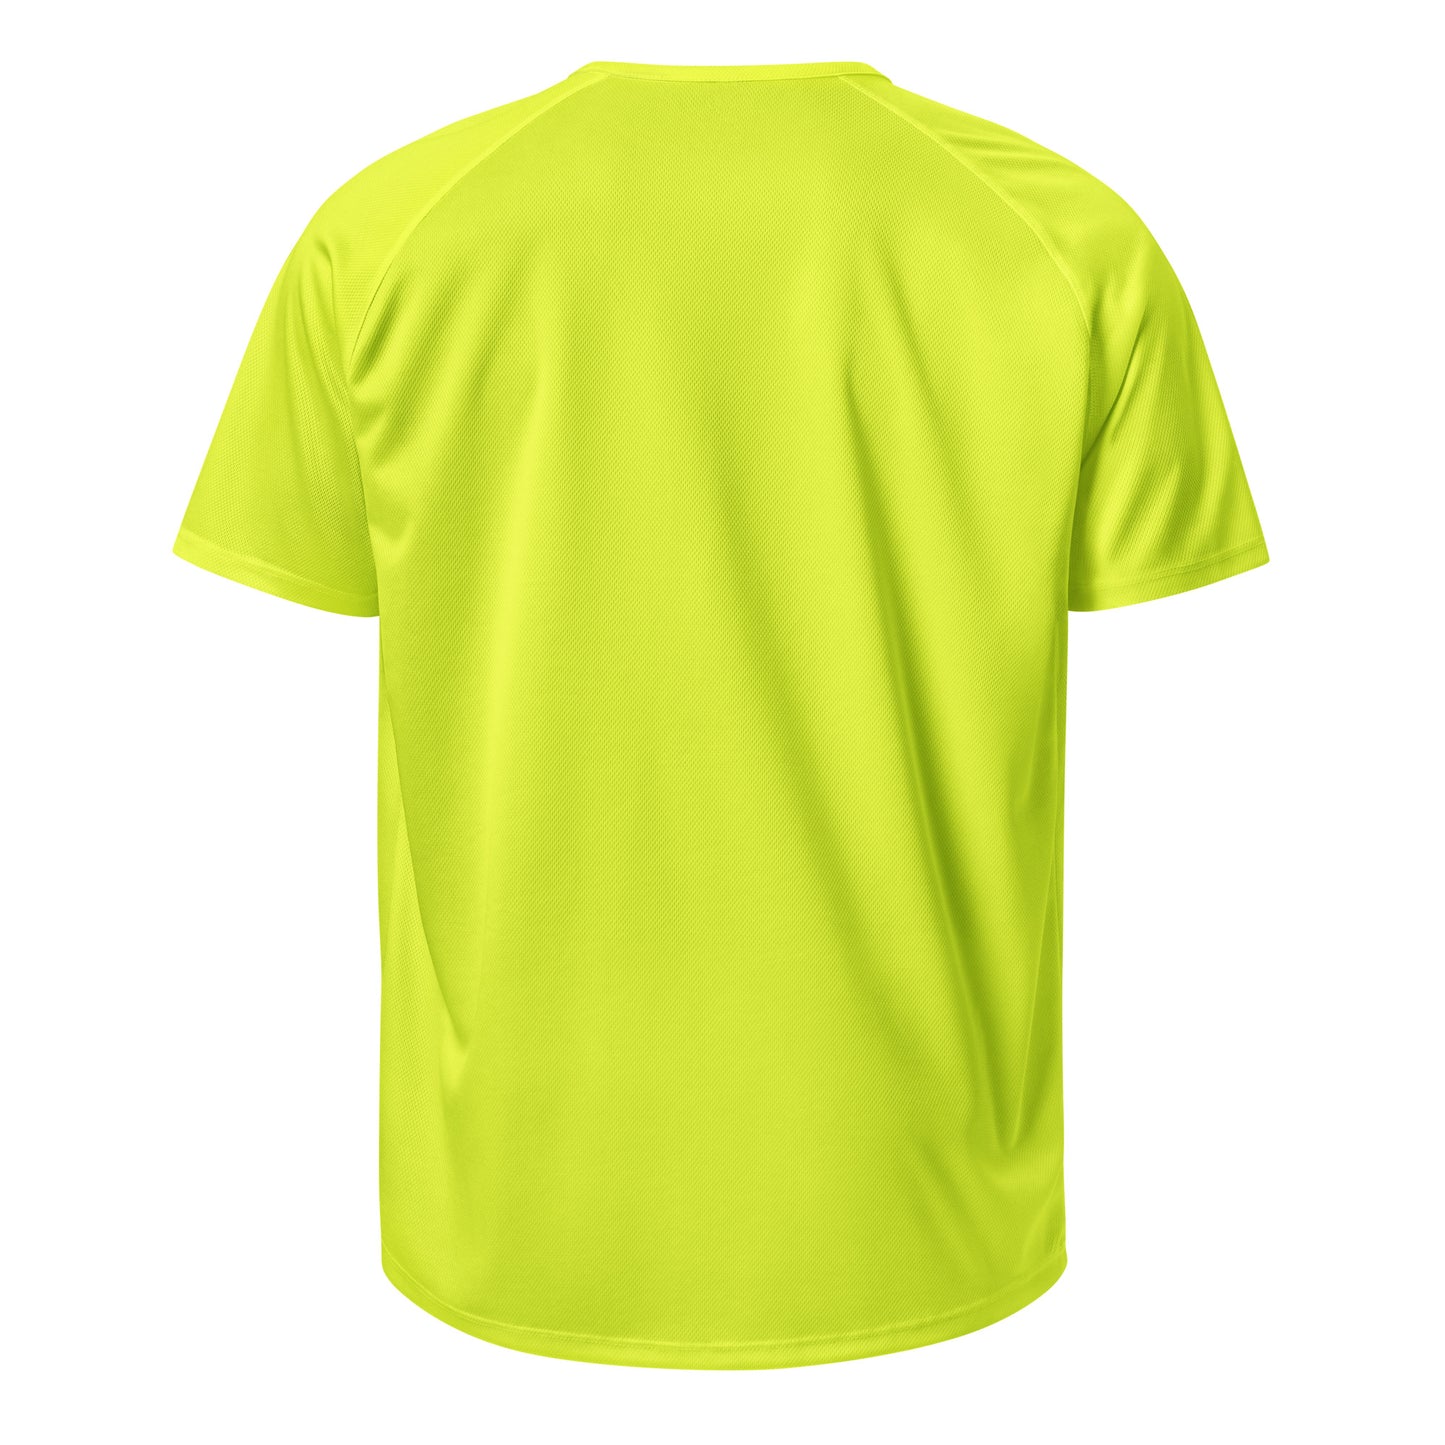 E131 - Sports/Breathable Fabric (MX win : Yellow)